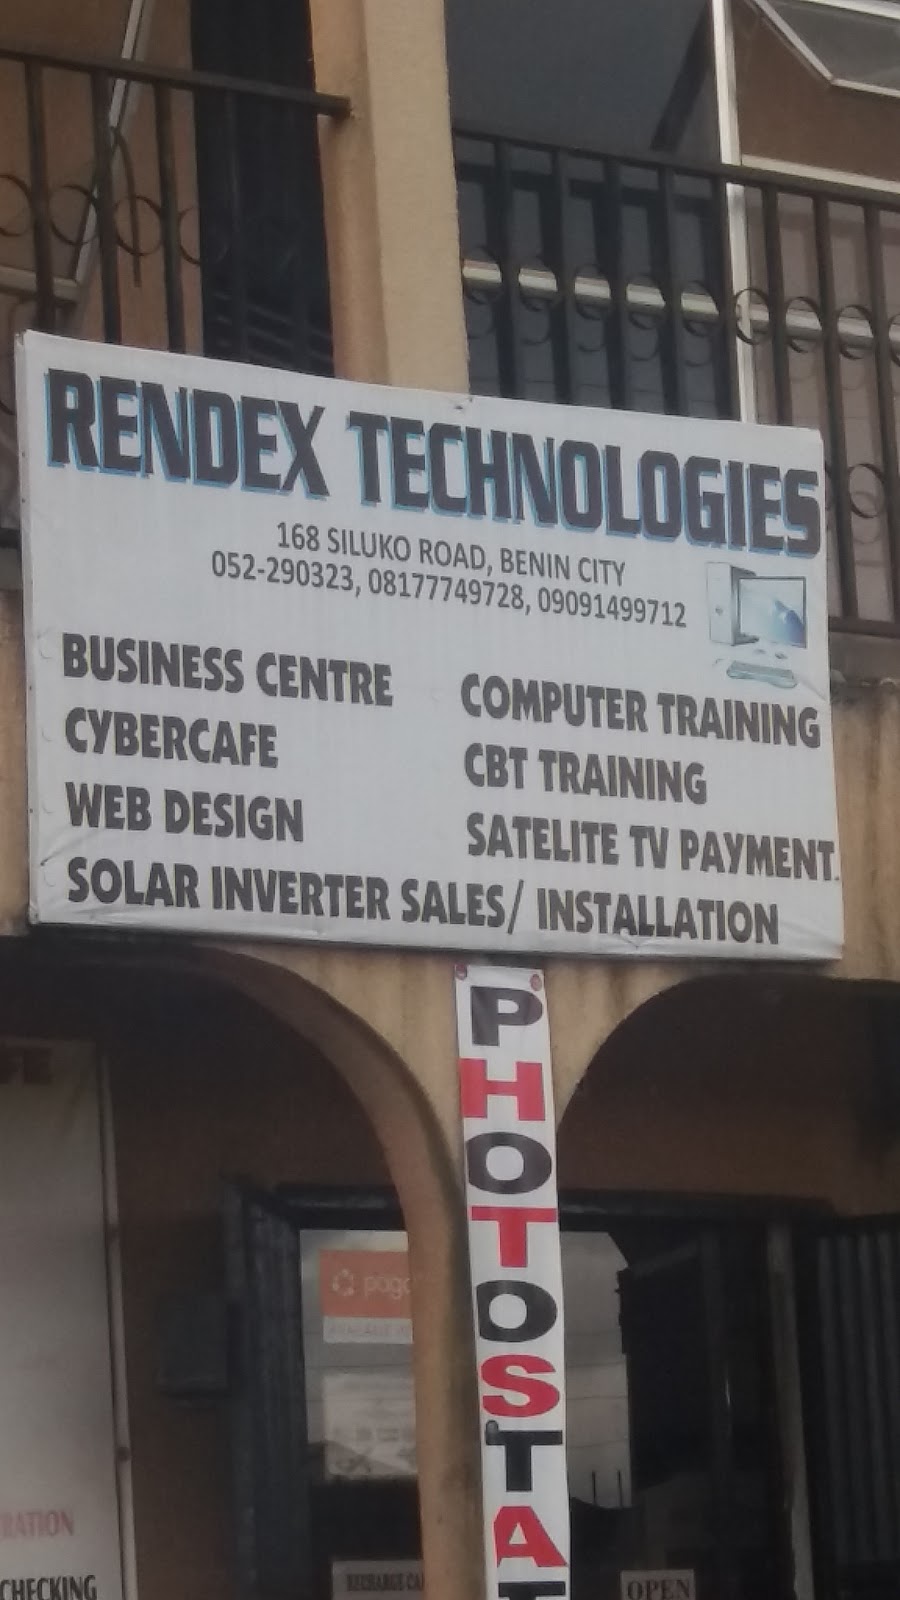 Rendex Technologies